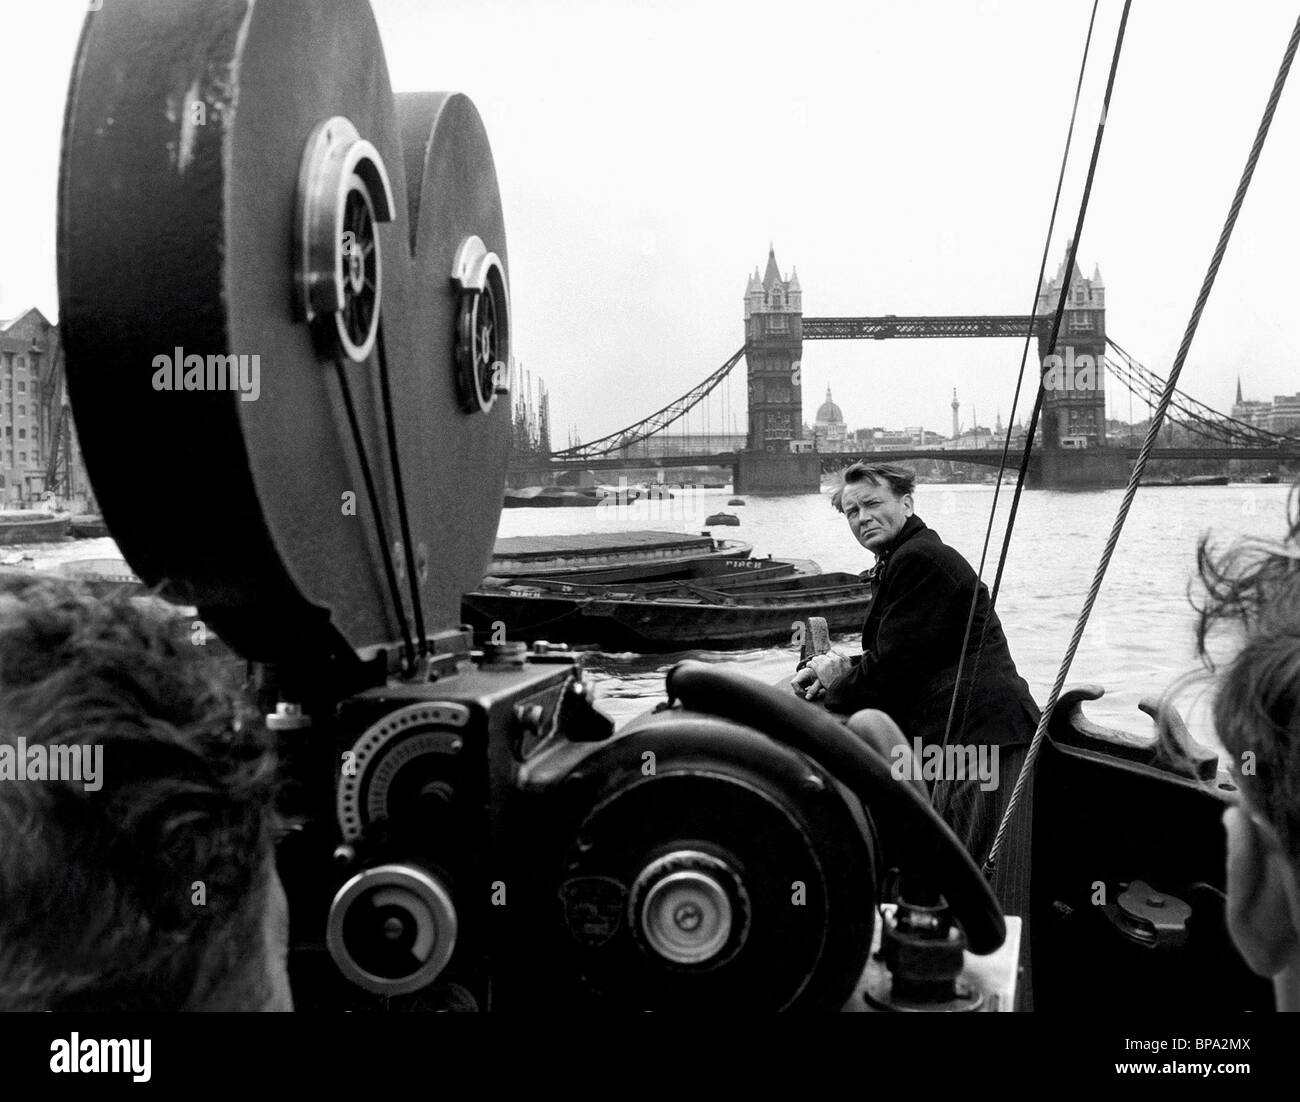 JOHN MILLS ON THE RIVER THAMES THE LONG MEMORY (1952) Stock Photo